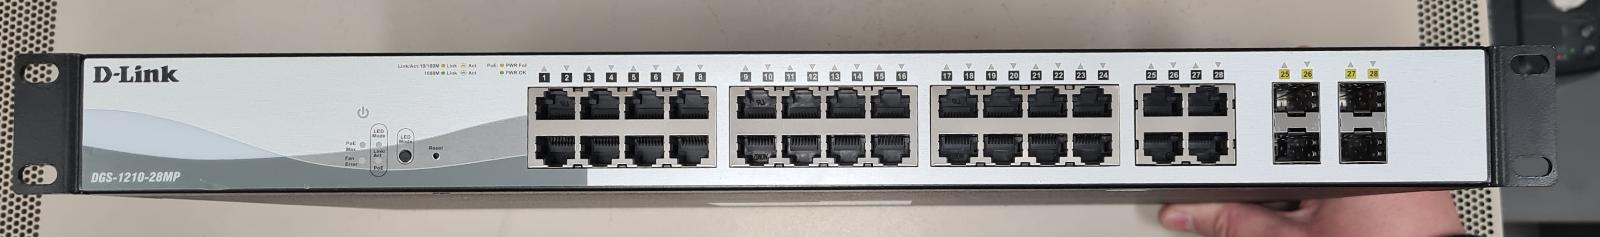 SWITCH D-Link DGS-1210-28MP - Komponenty pre PC